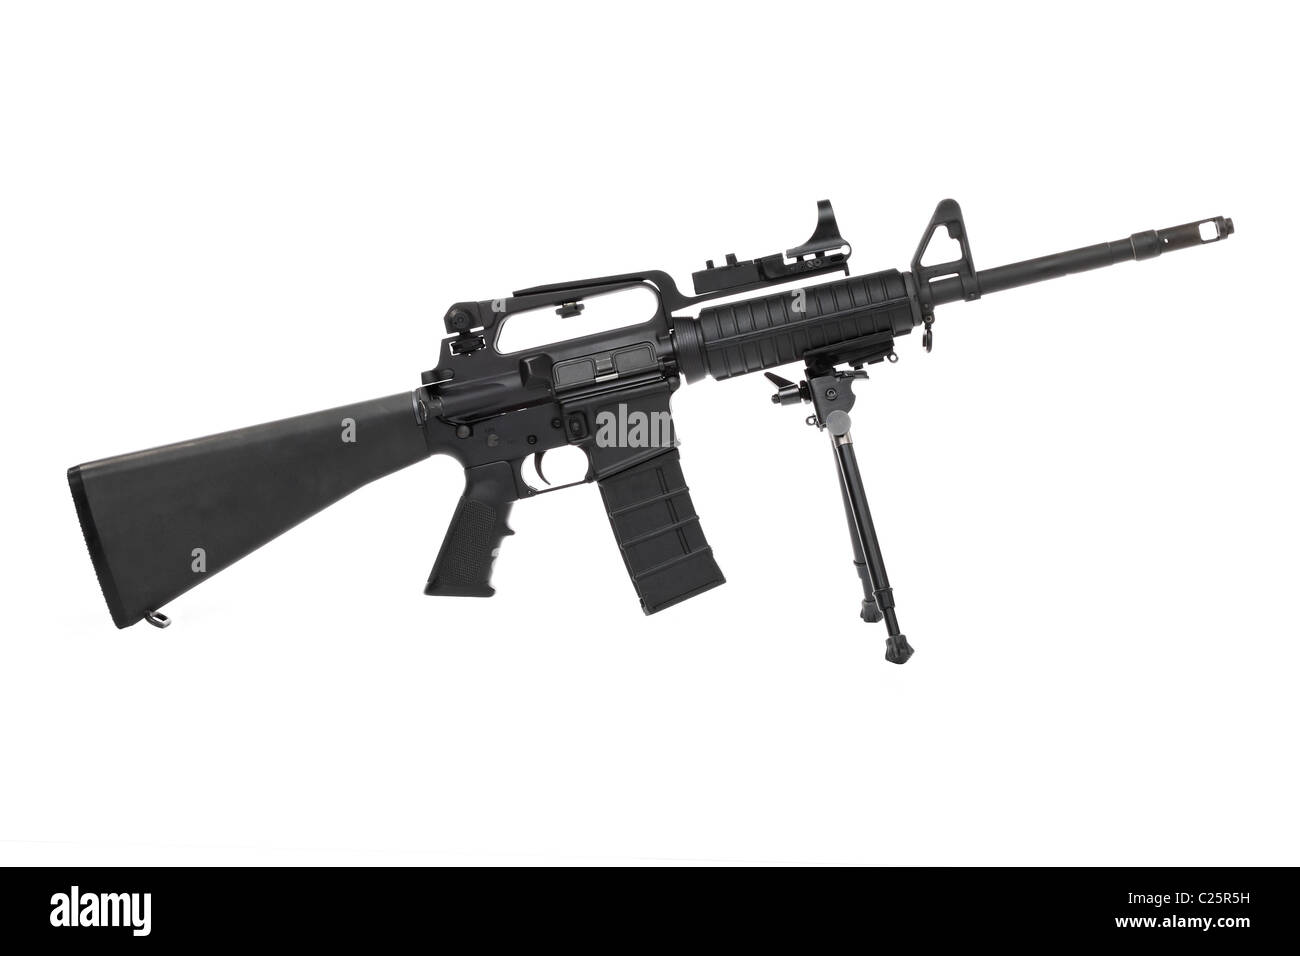 military style assault rifle gun on bipod mount isolated Stock Photo